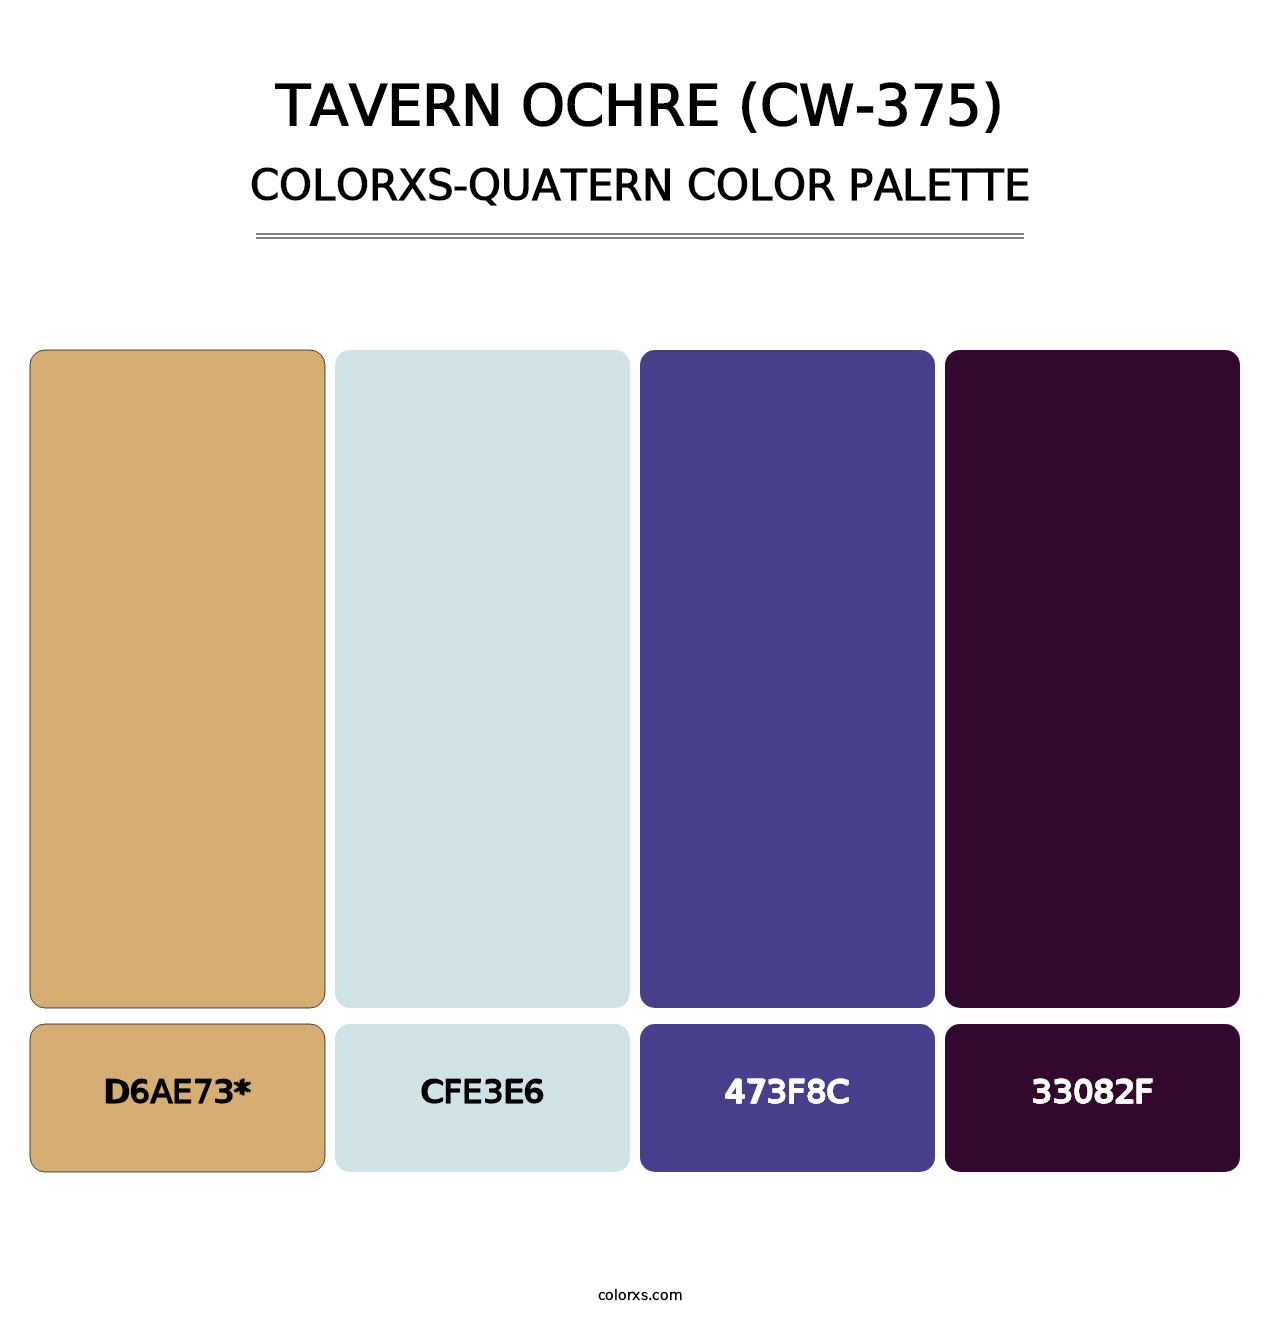 Tavern Ochre (CW-375) - Colorxs Quatern Palette